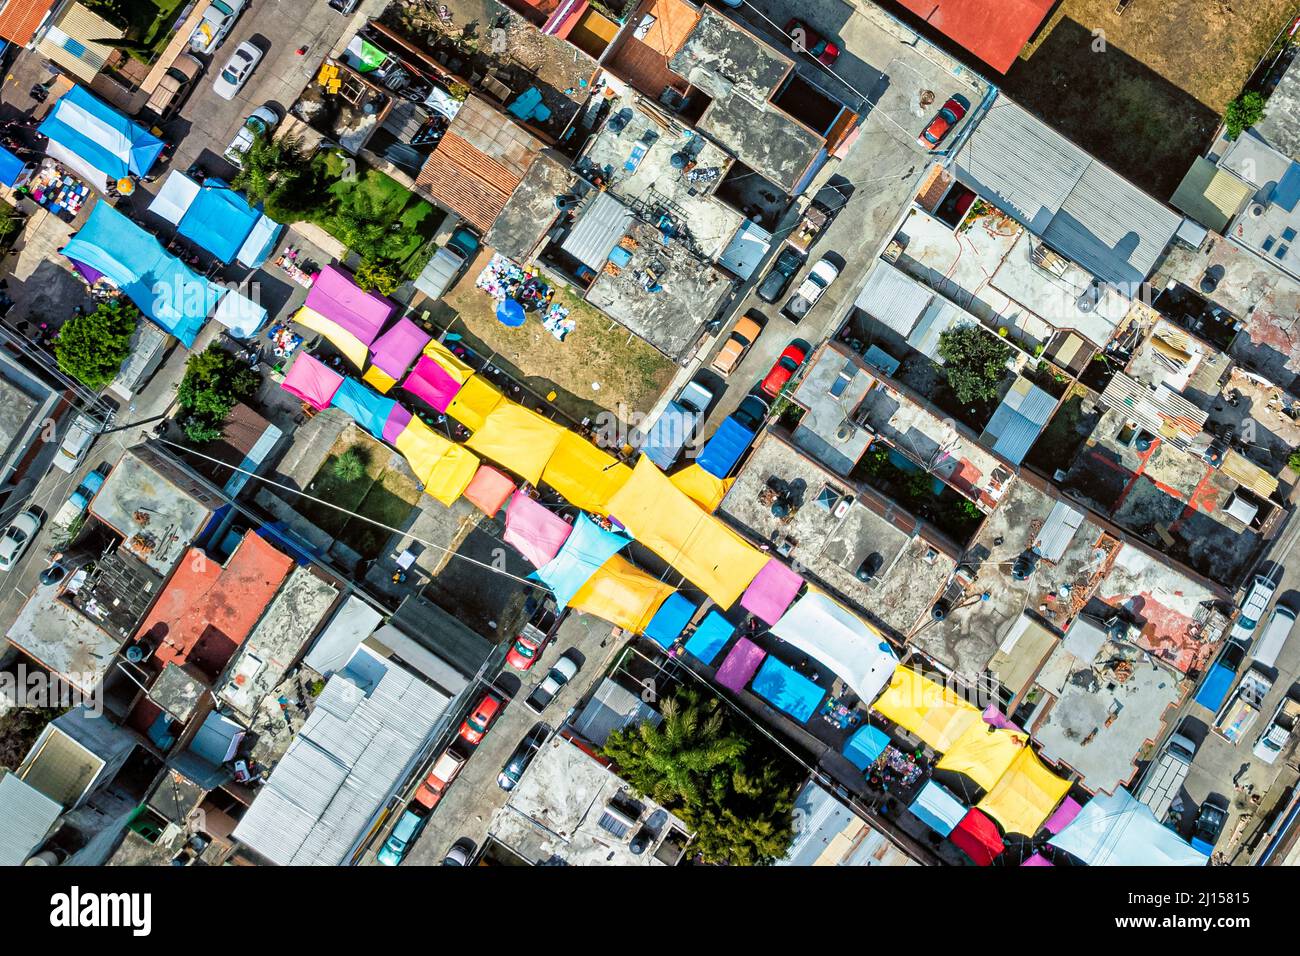 Vista aérea de un colorido mercado callejero en Morelia, Michoacán, México. Foto de stock